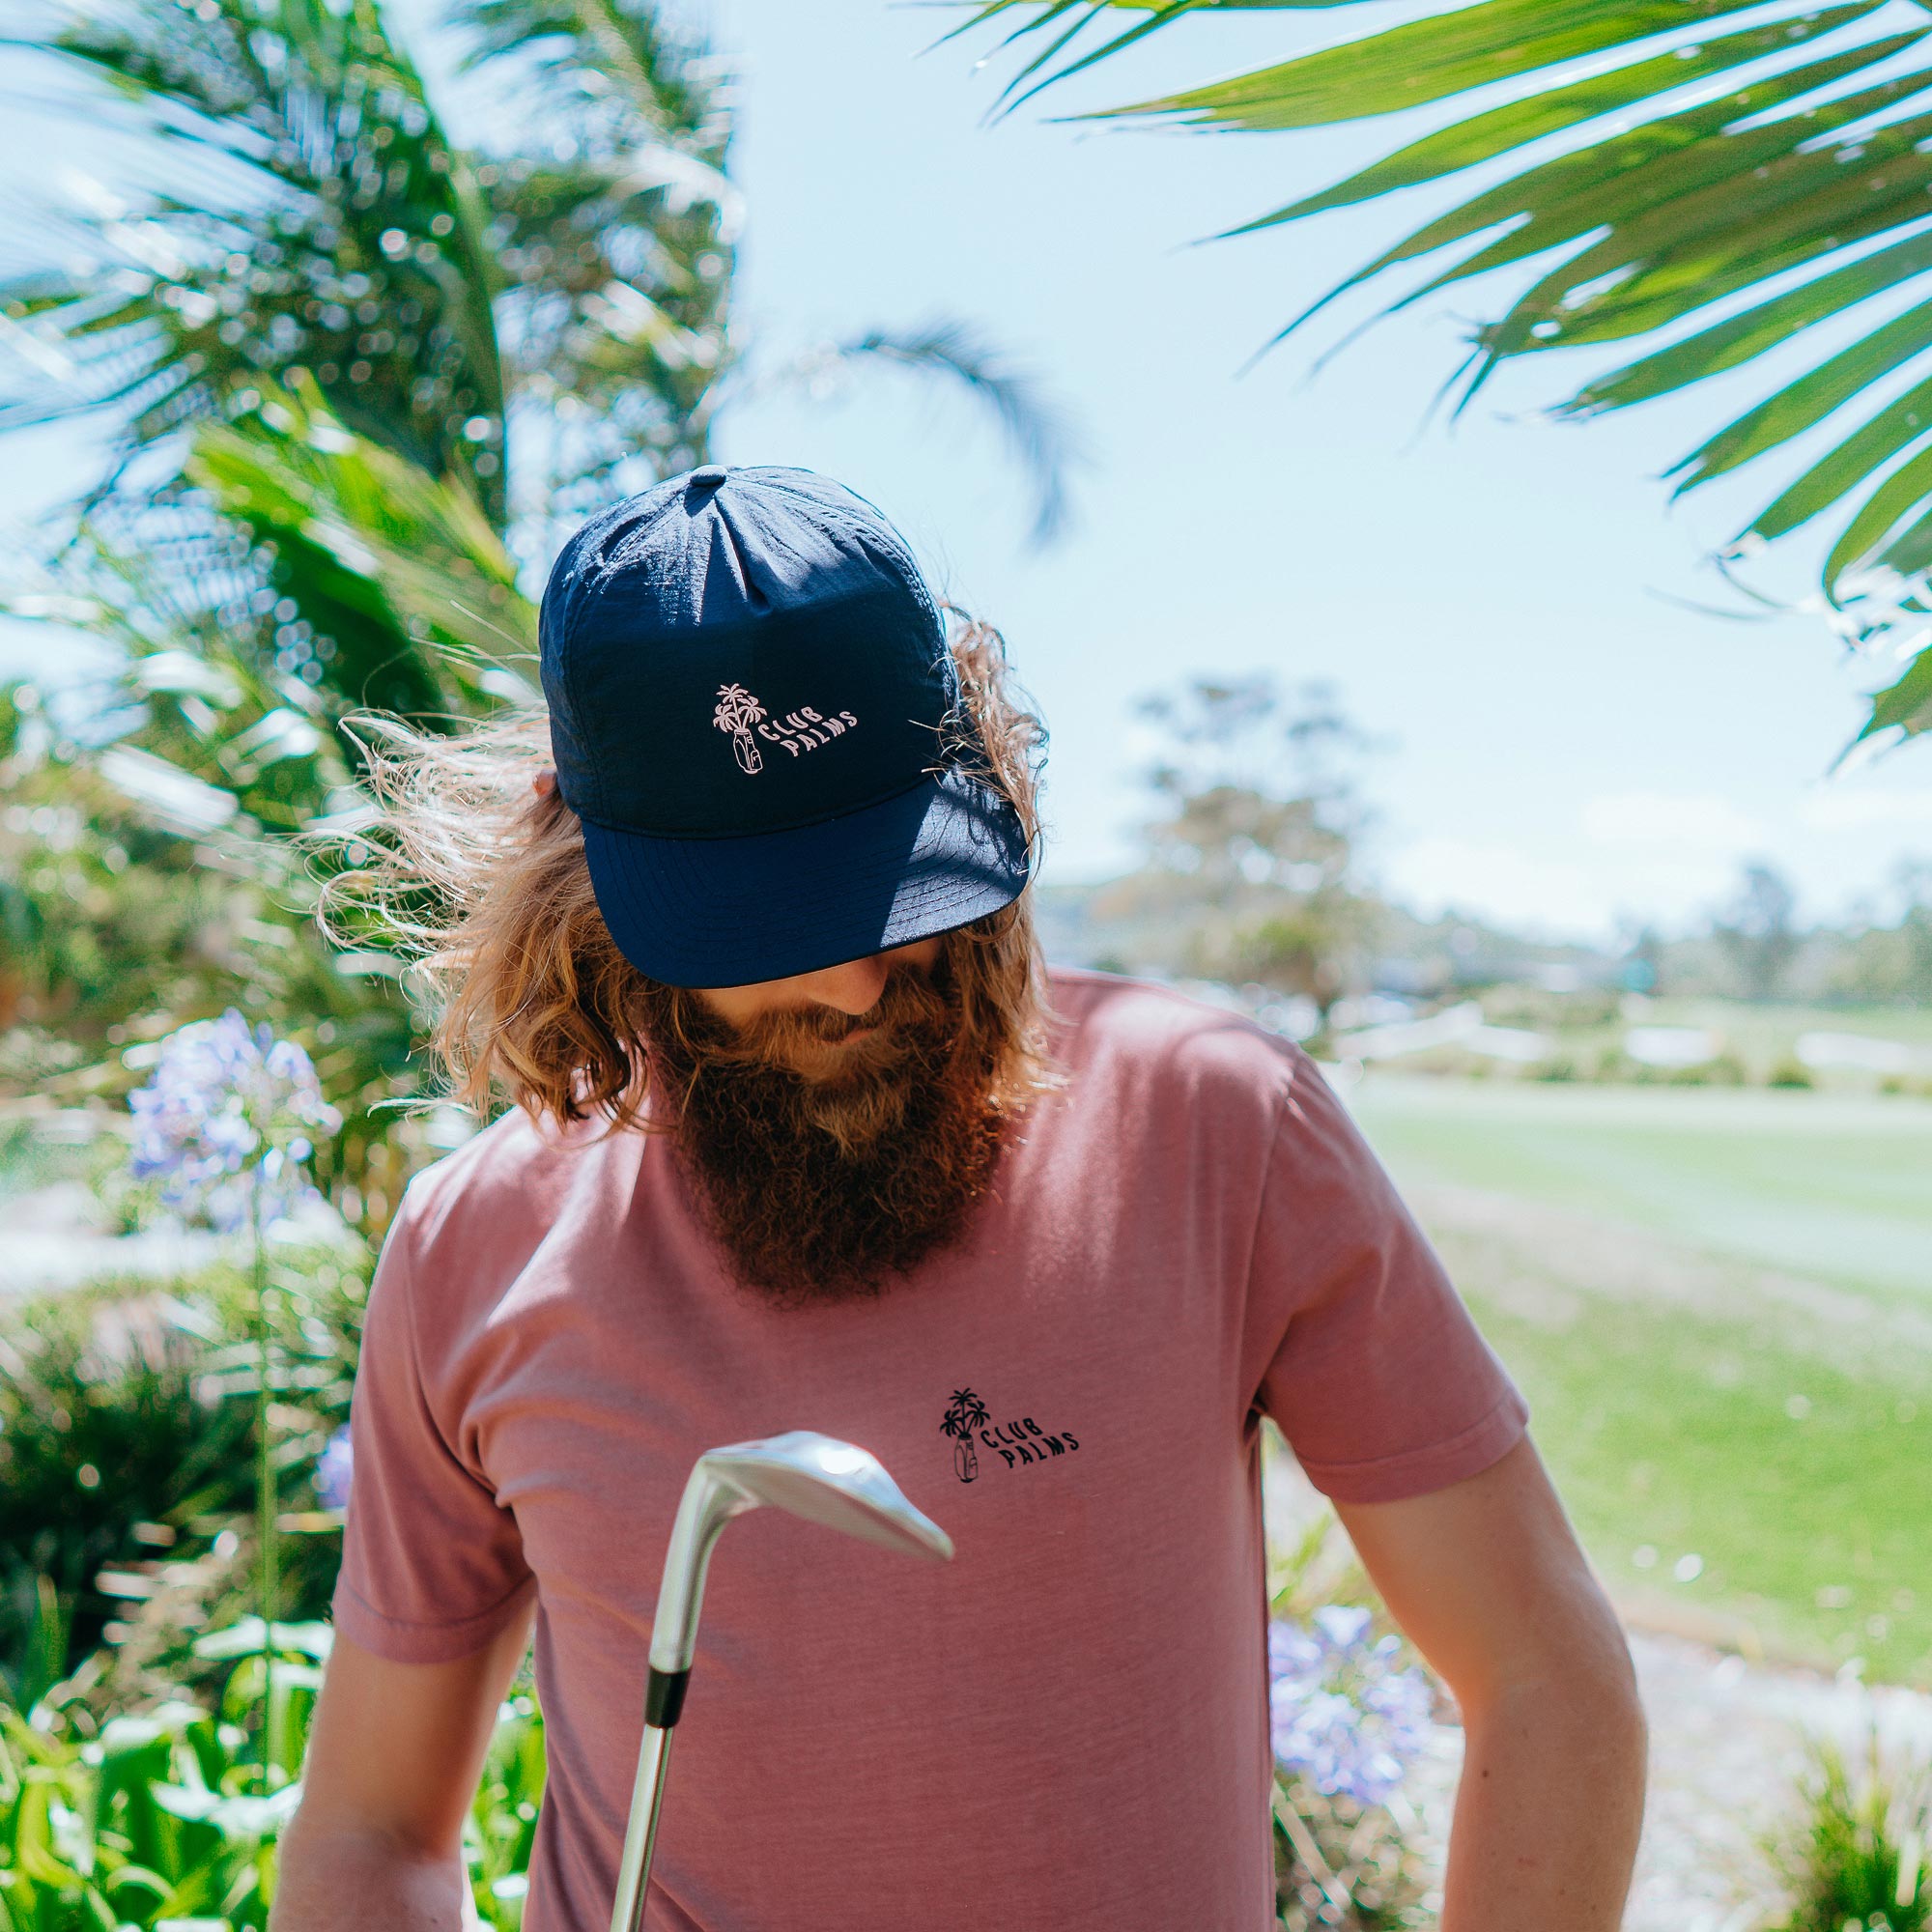 birds-of-condor-navy-blue-golf-club-palms-nylon-summer-cap-hat-front